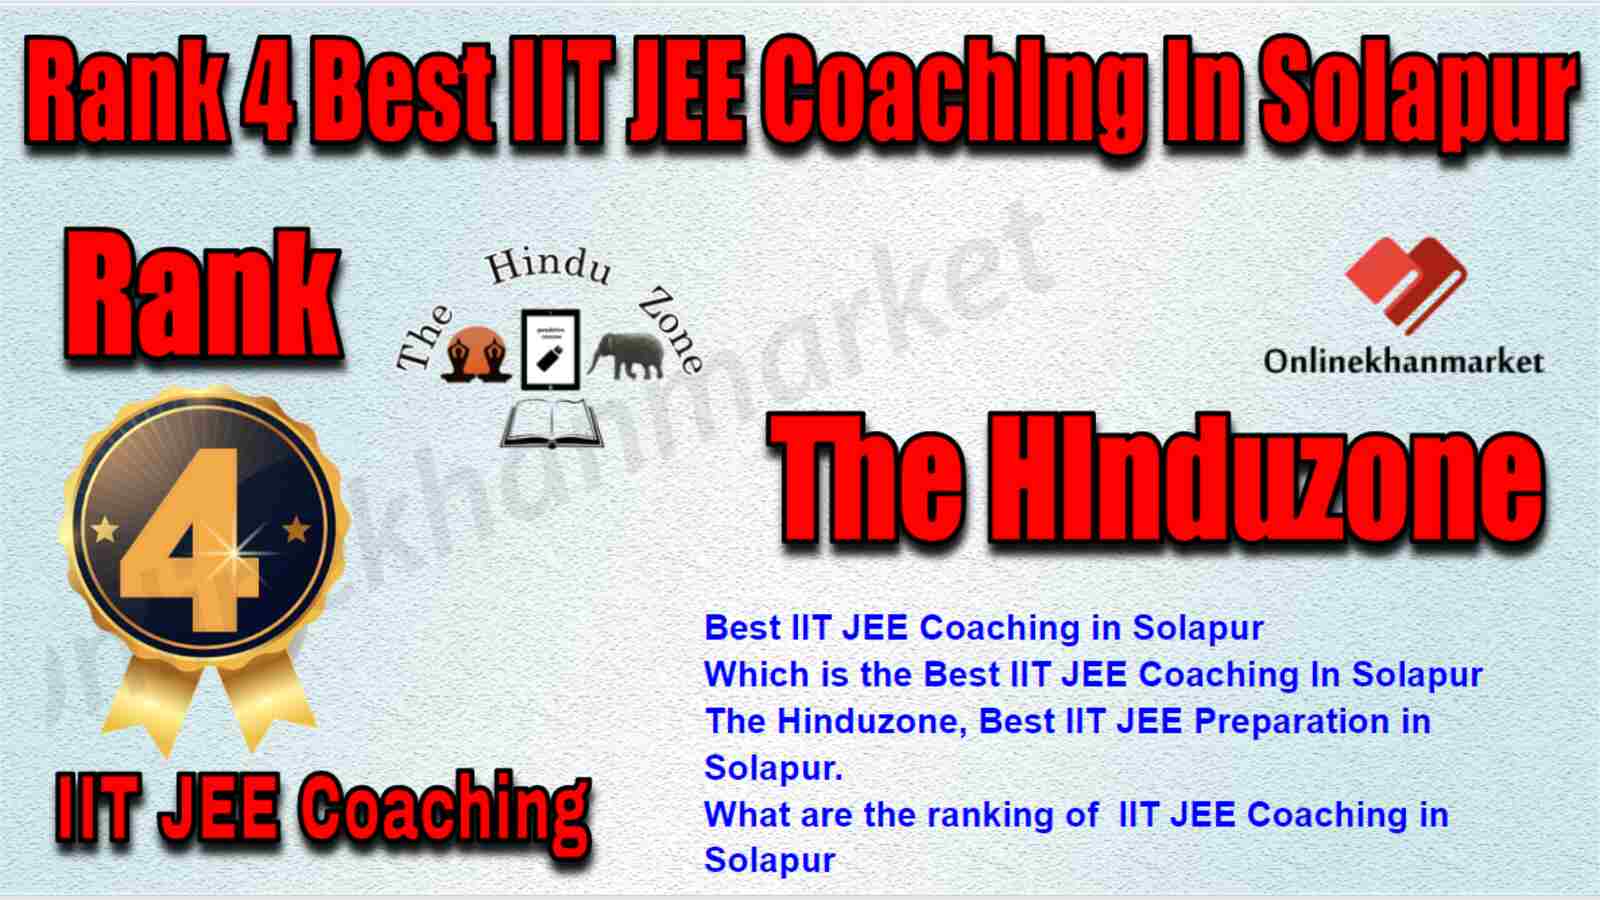 Rank 4 Best IIT JEE Coaching in Solapur